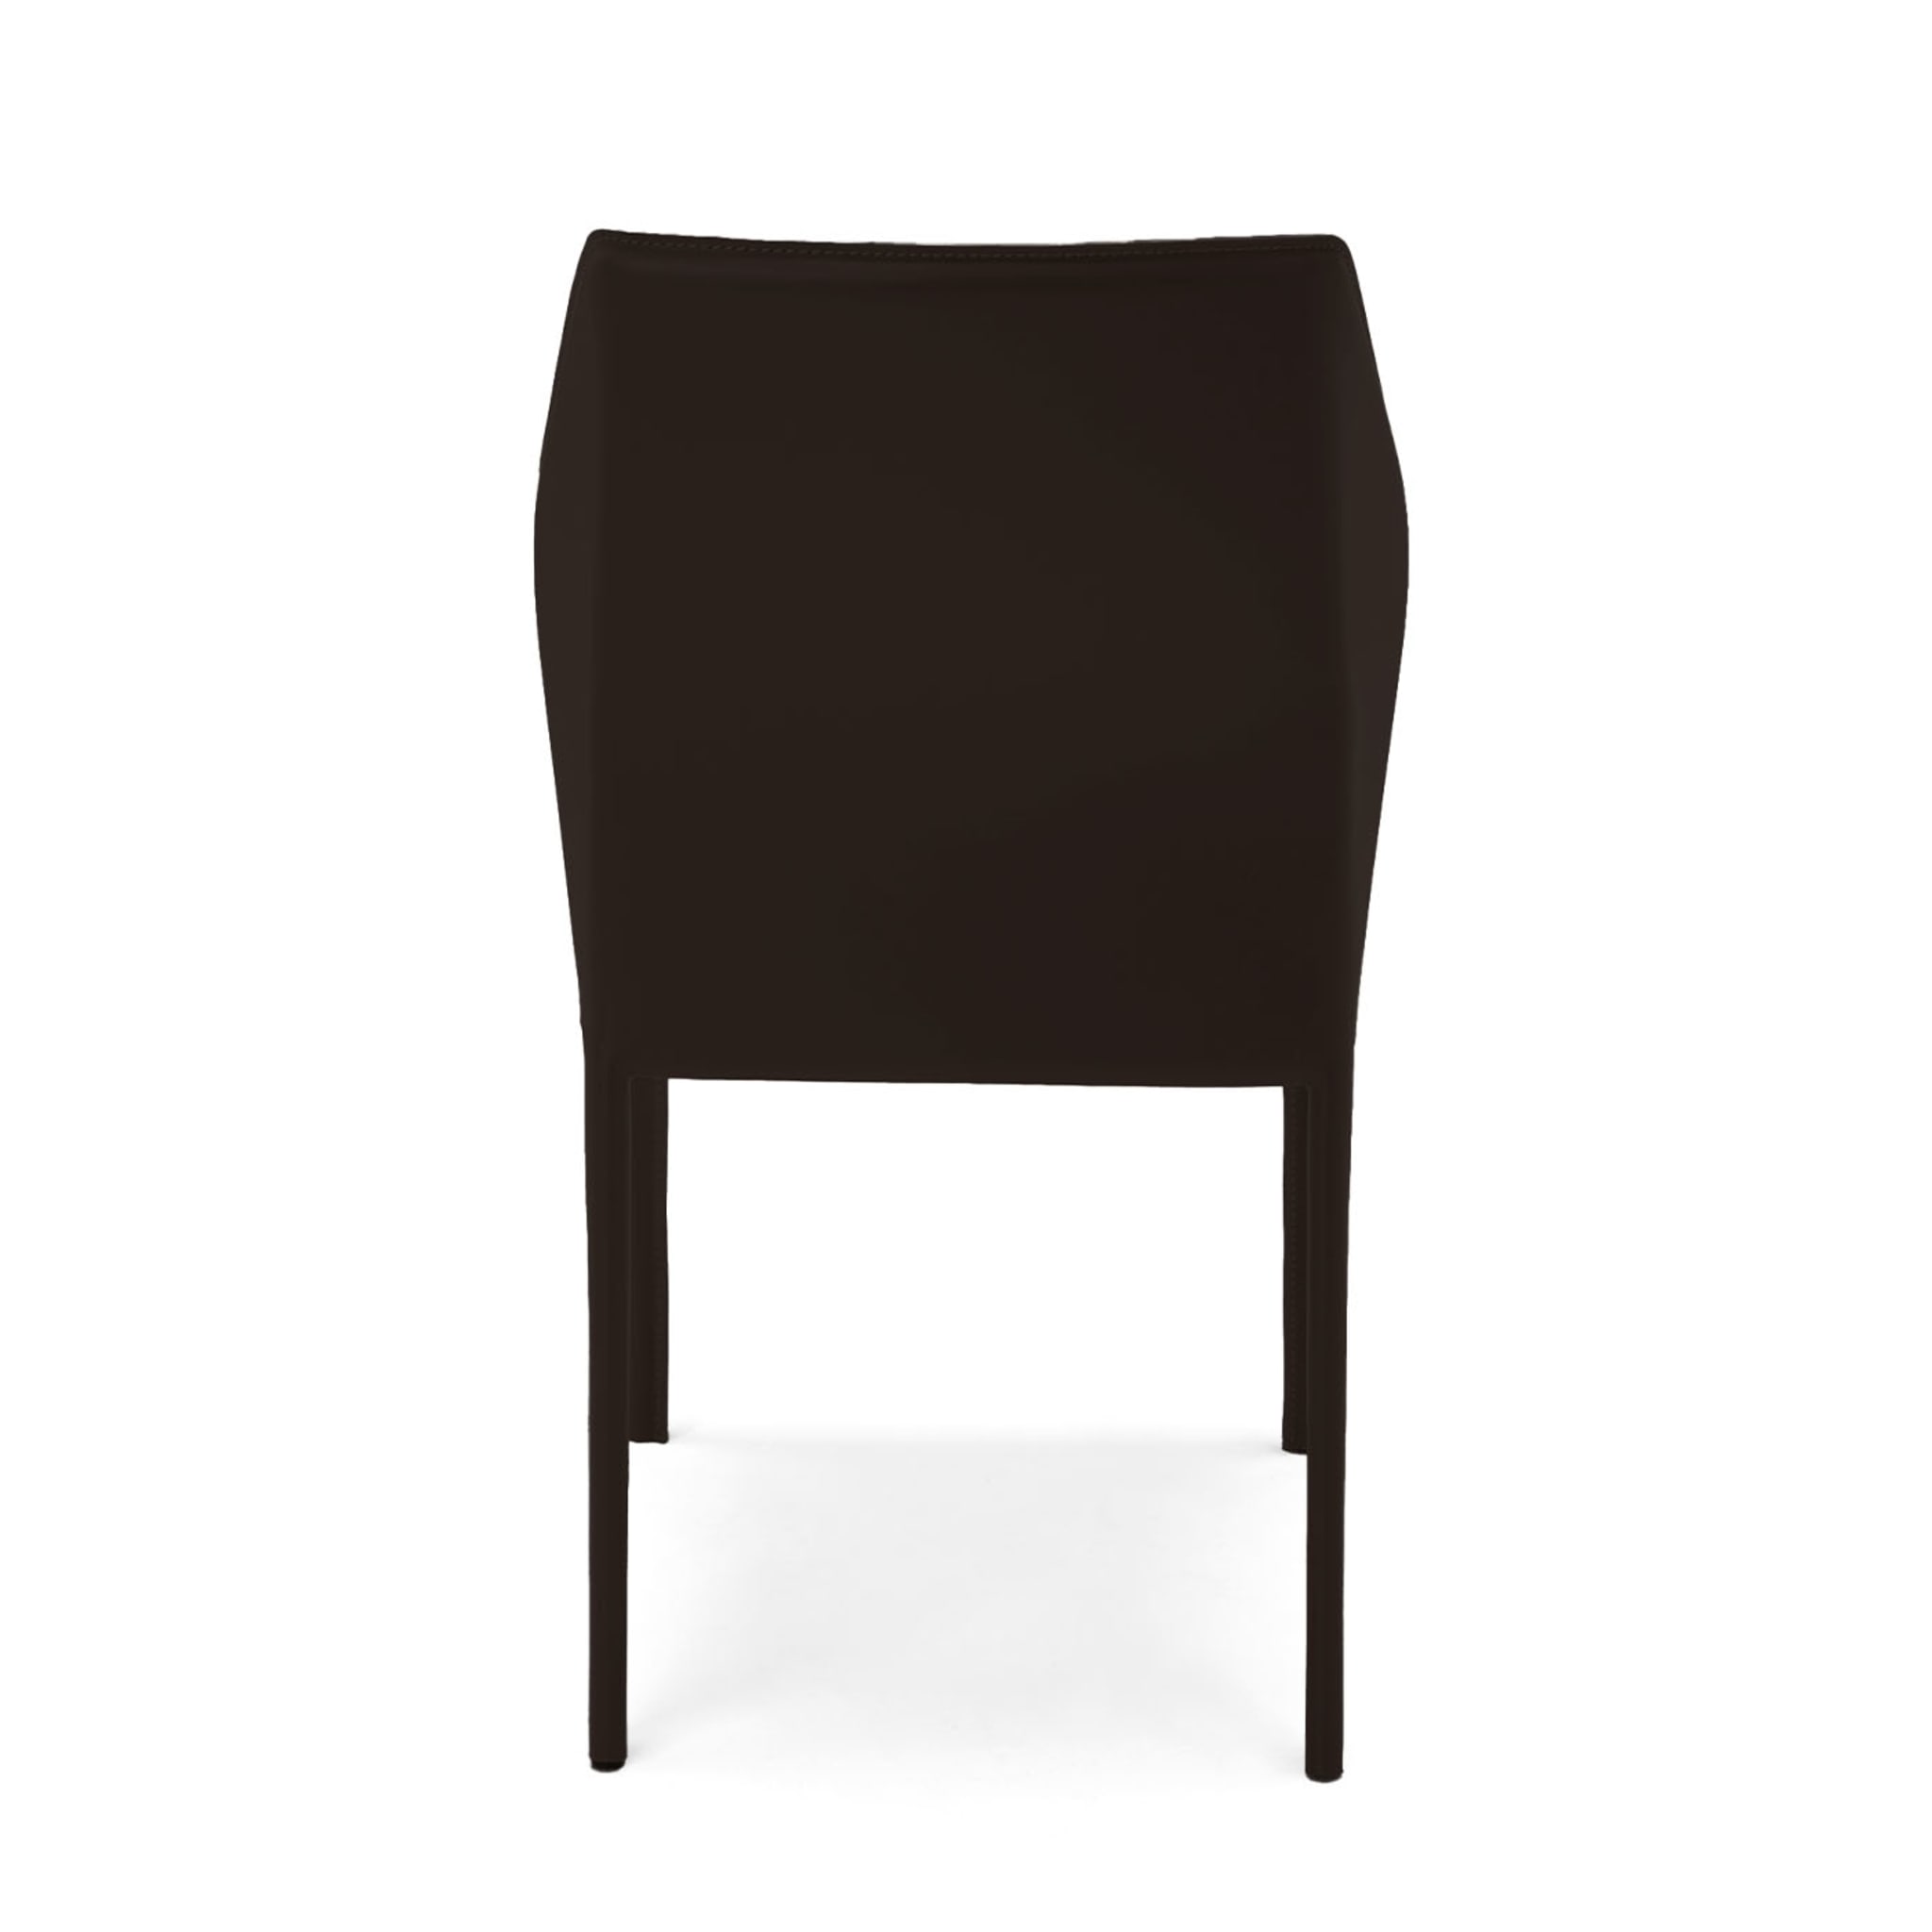 Set of 2 Fold Chair #2 - Alternative view 2